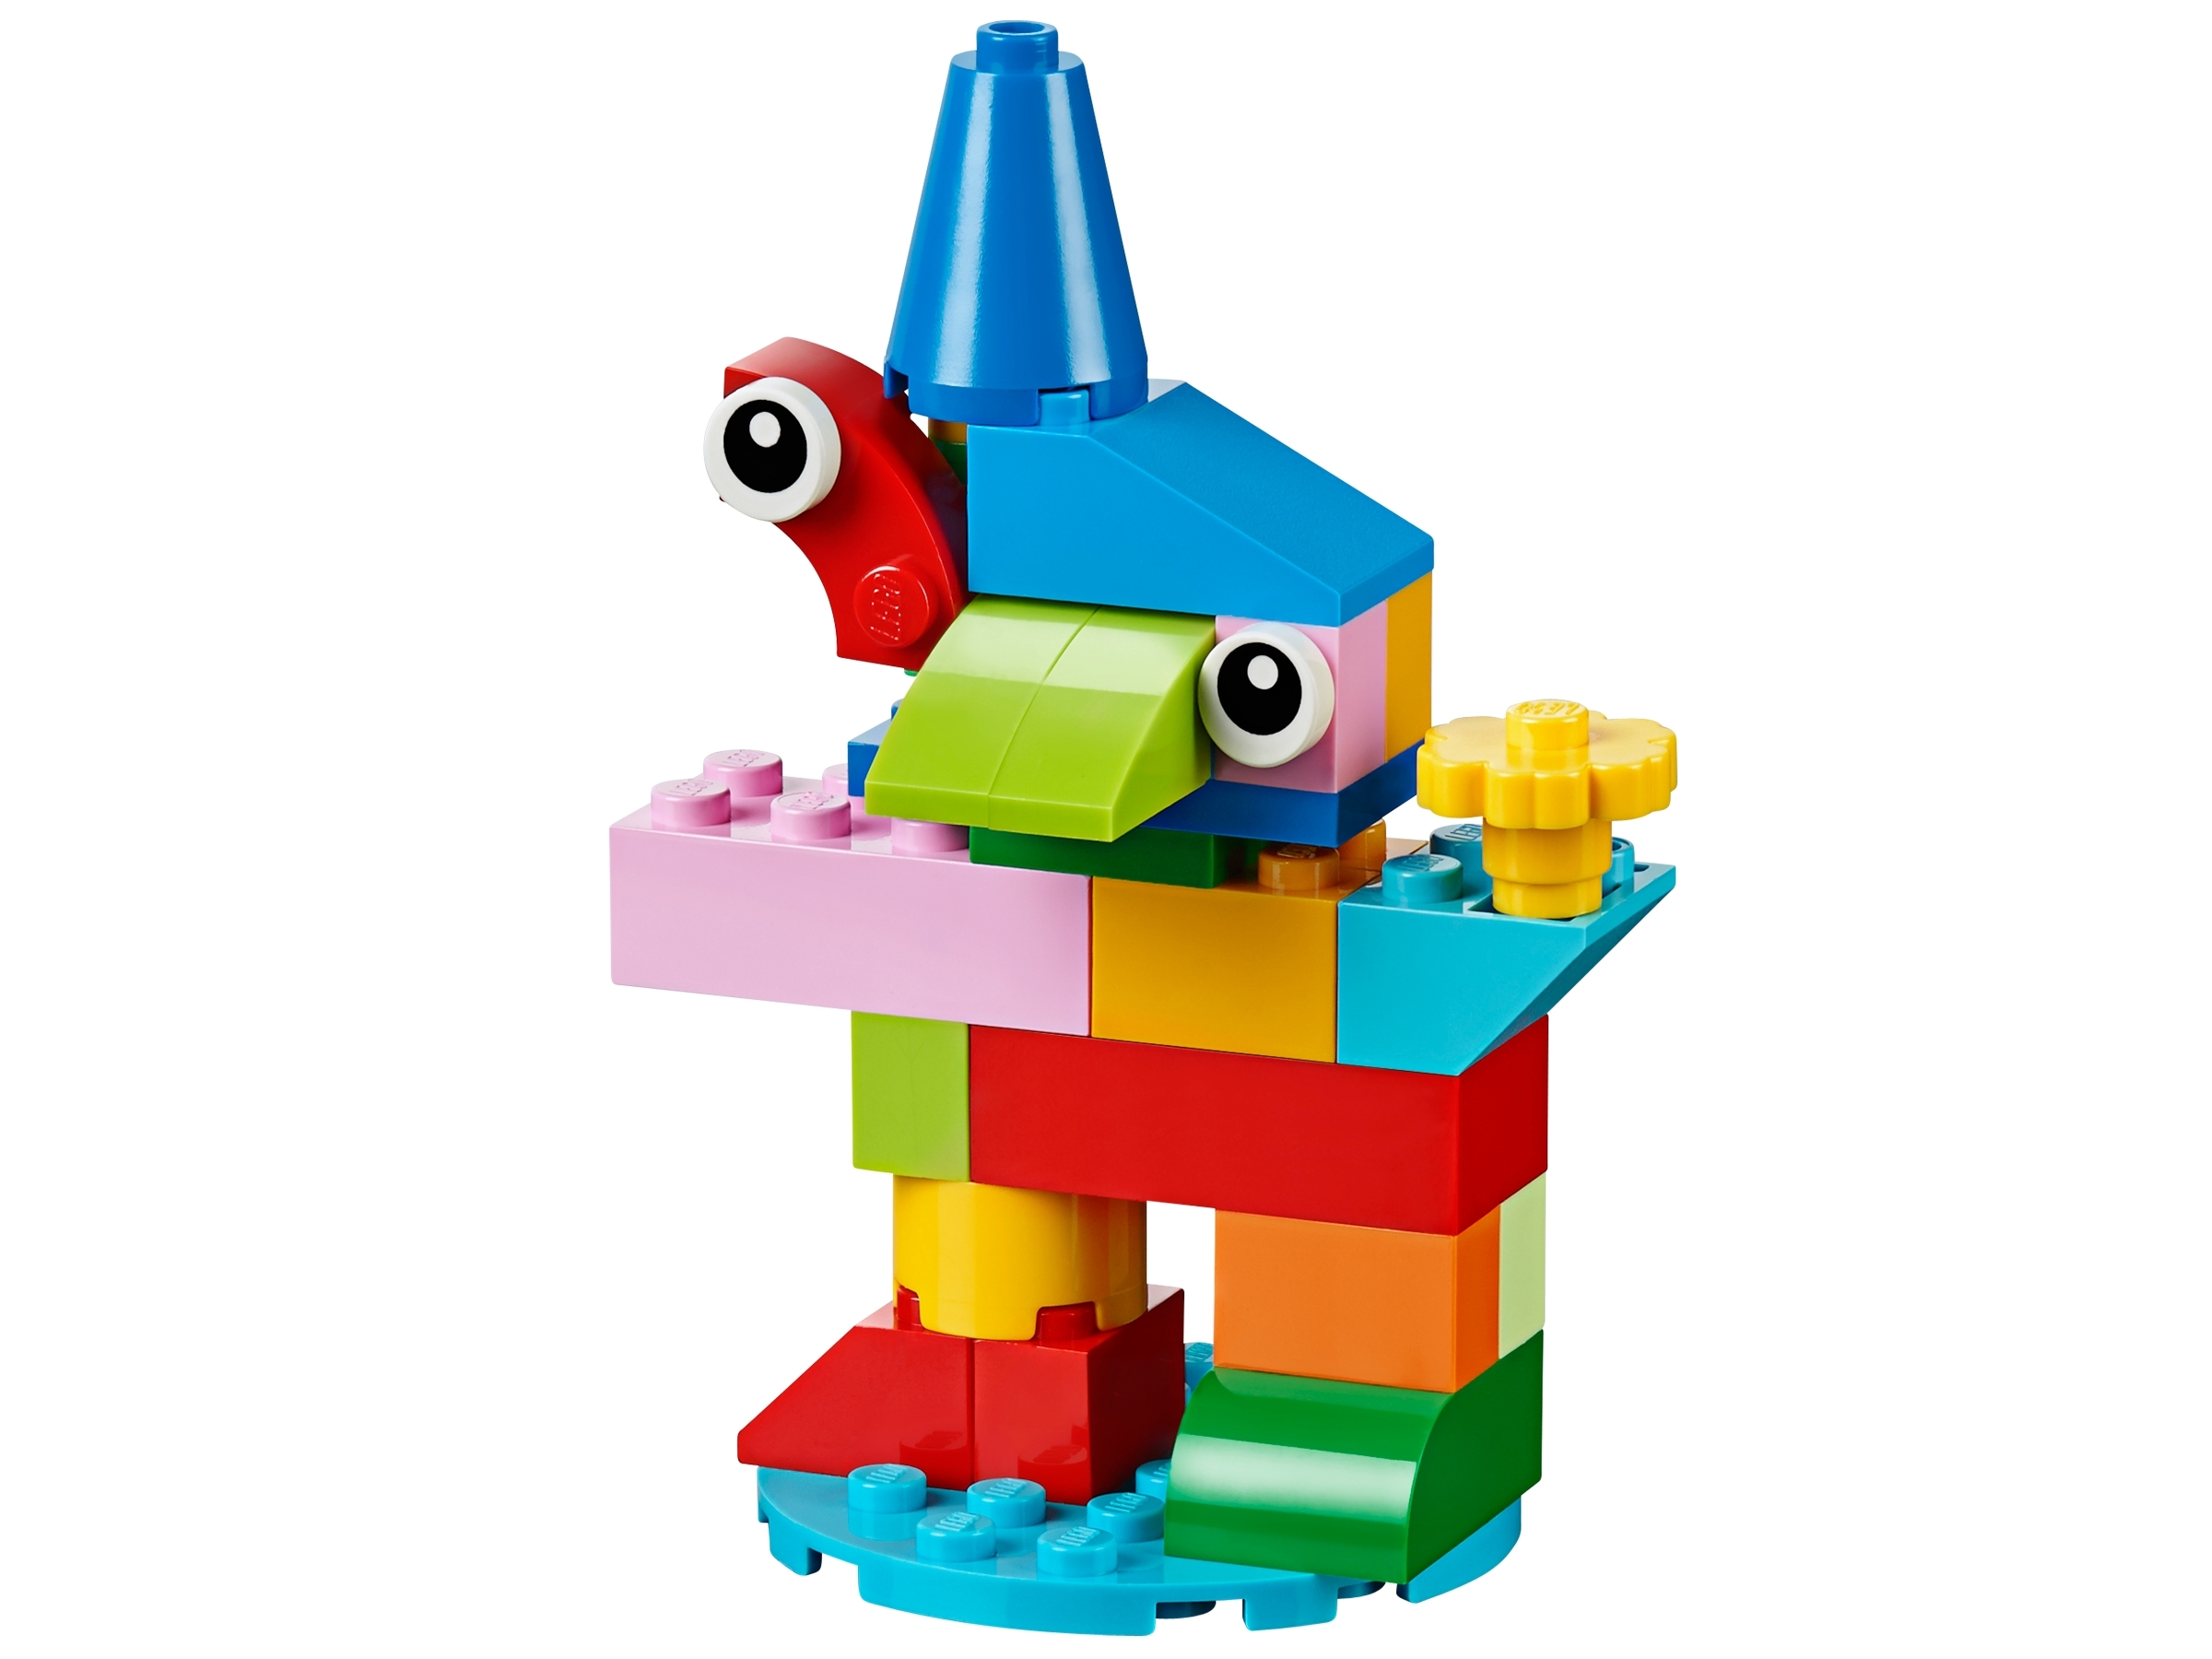 lego classic creative bricks set 10692